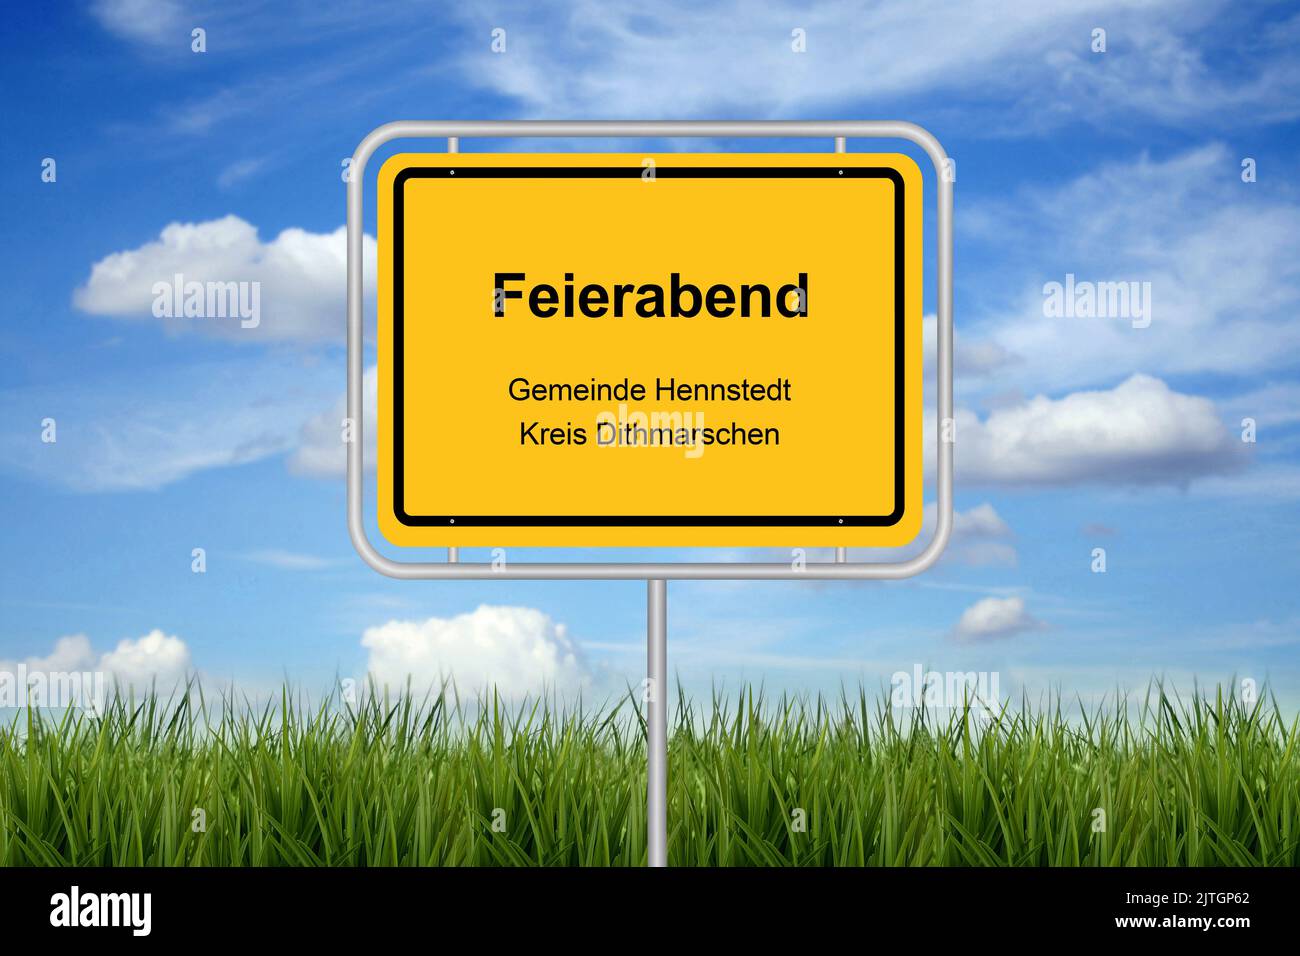 city sign lettering Feierabend (home time), Gemeinde Hennstedt, Kreis Dithmarschen, Germany, Lower Saxony Stock Photo